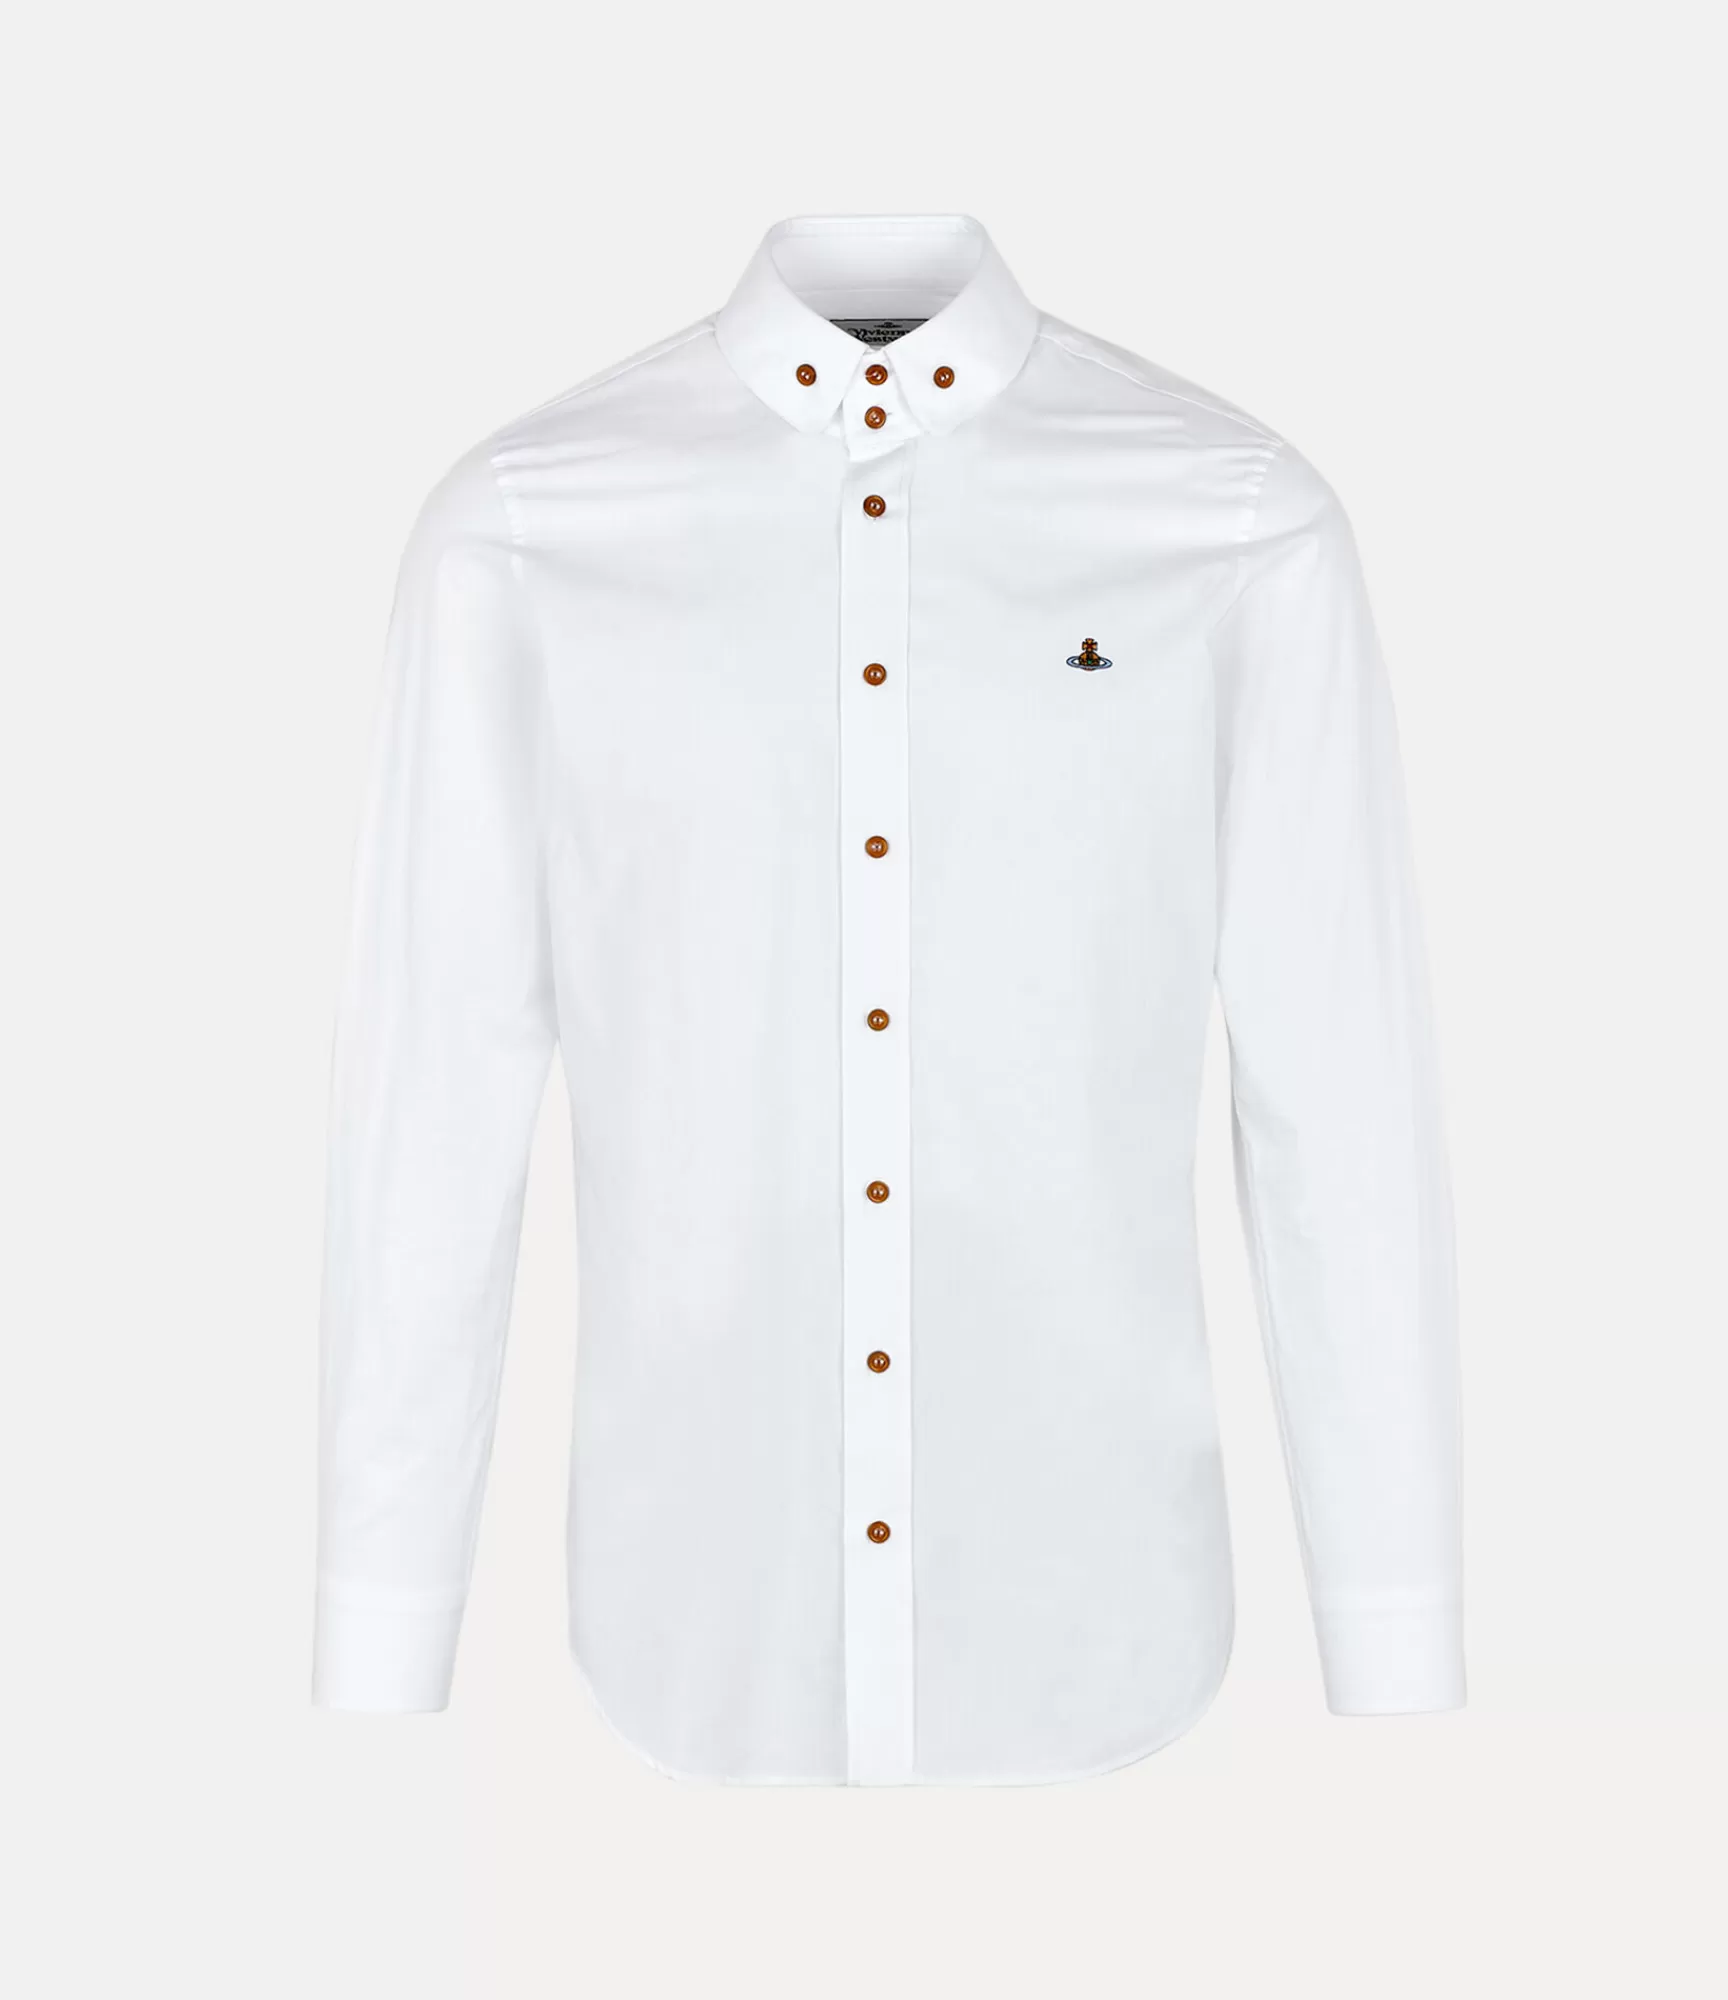 Vivienne Westwood Shirts*2 button krall White